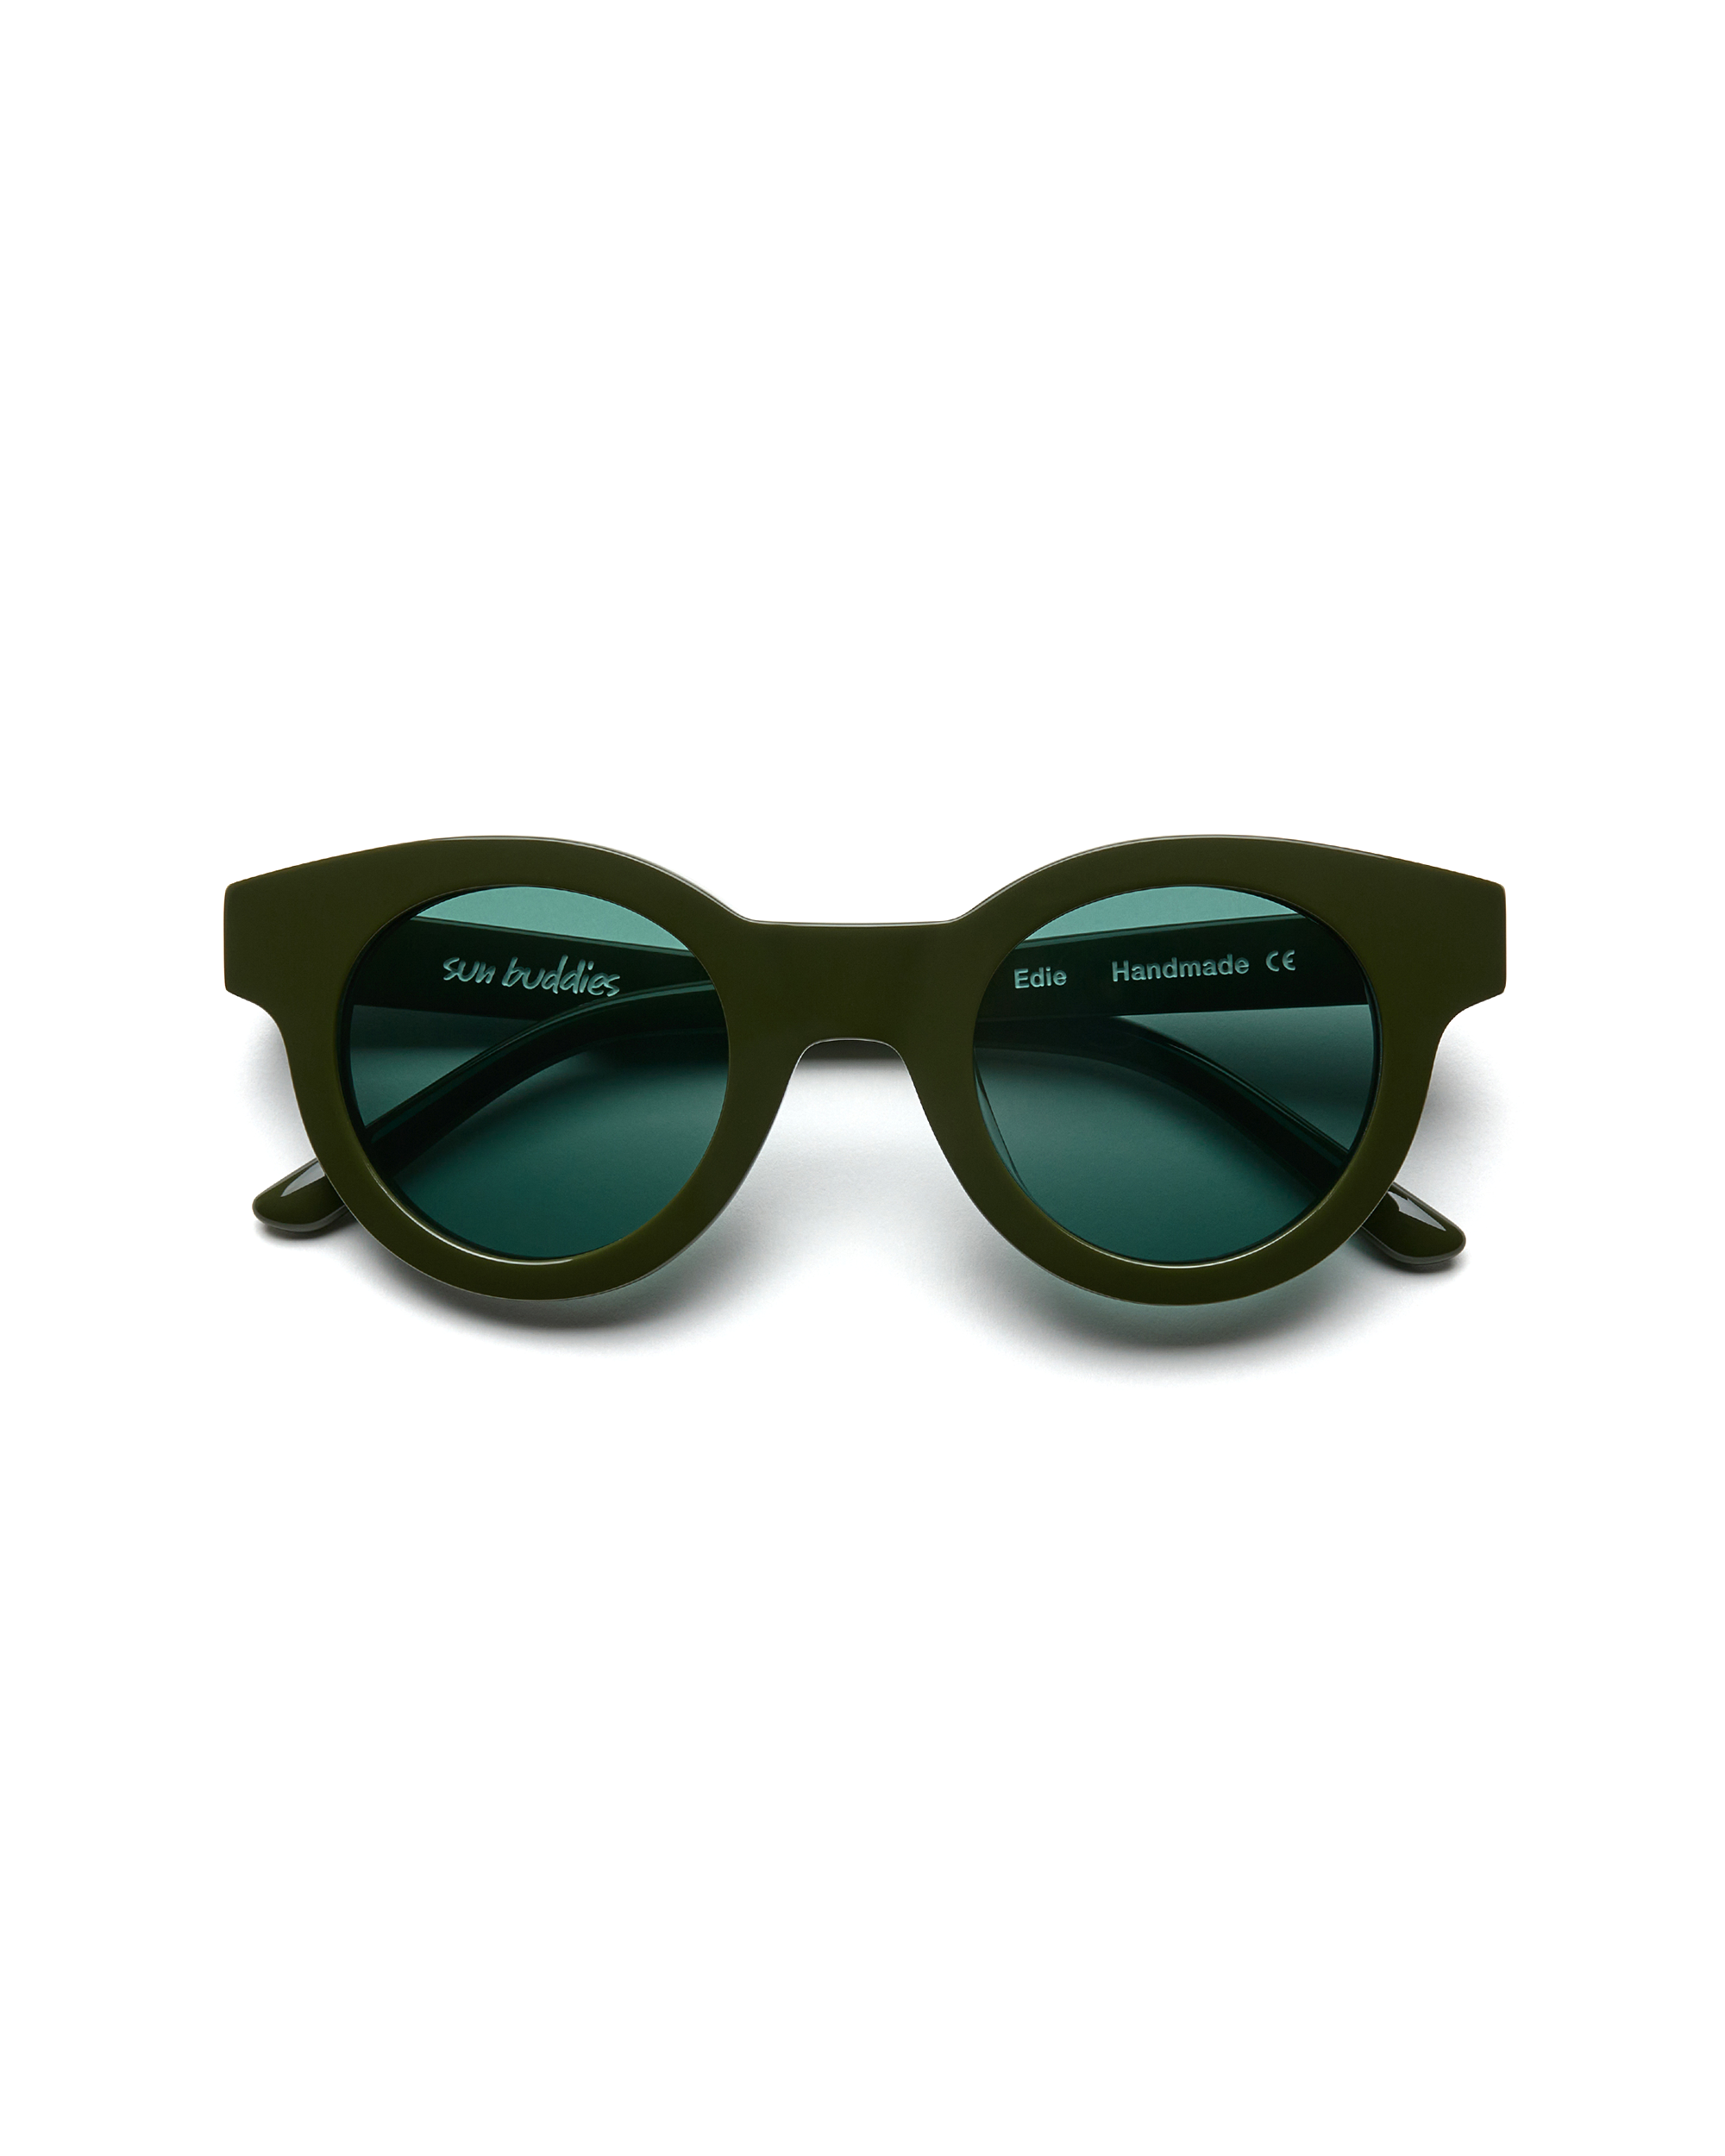 Edie Sunglasses - Solid Green